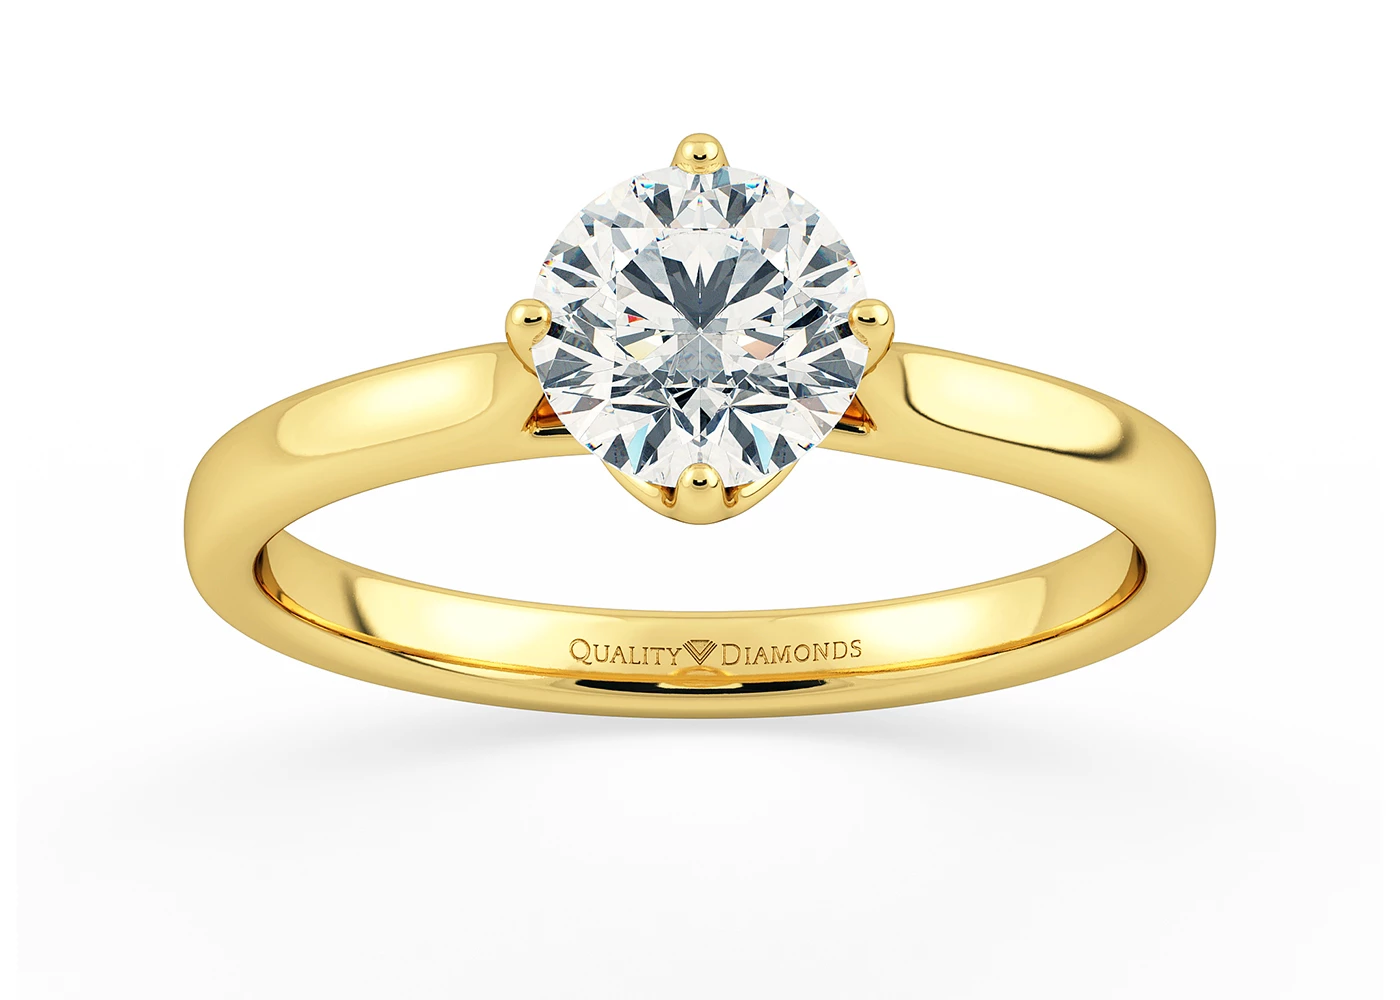 Round Brilliant Promessa Diamond Ring in 9K Yellow Gold